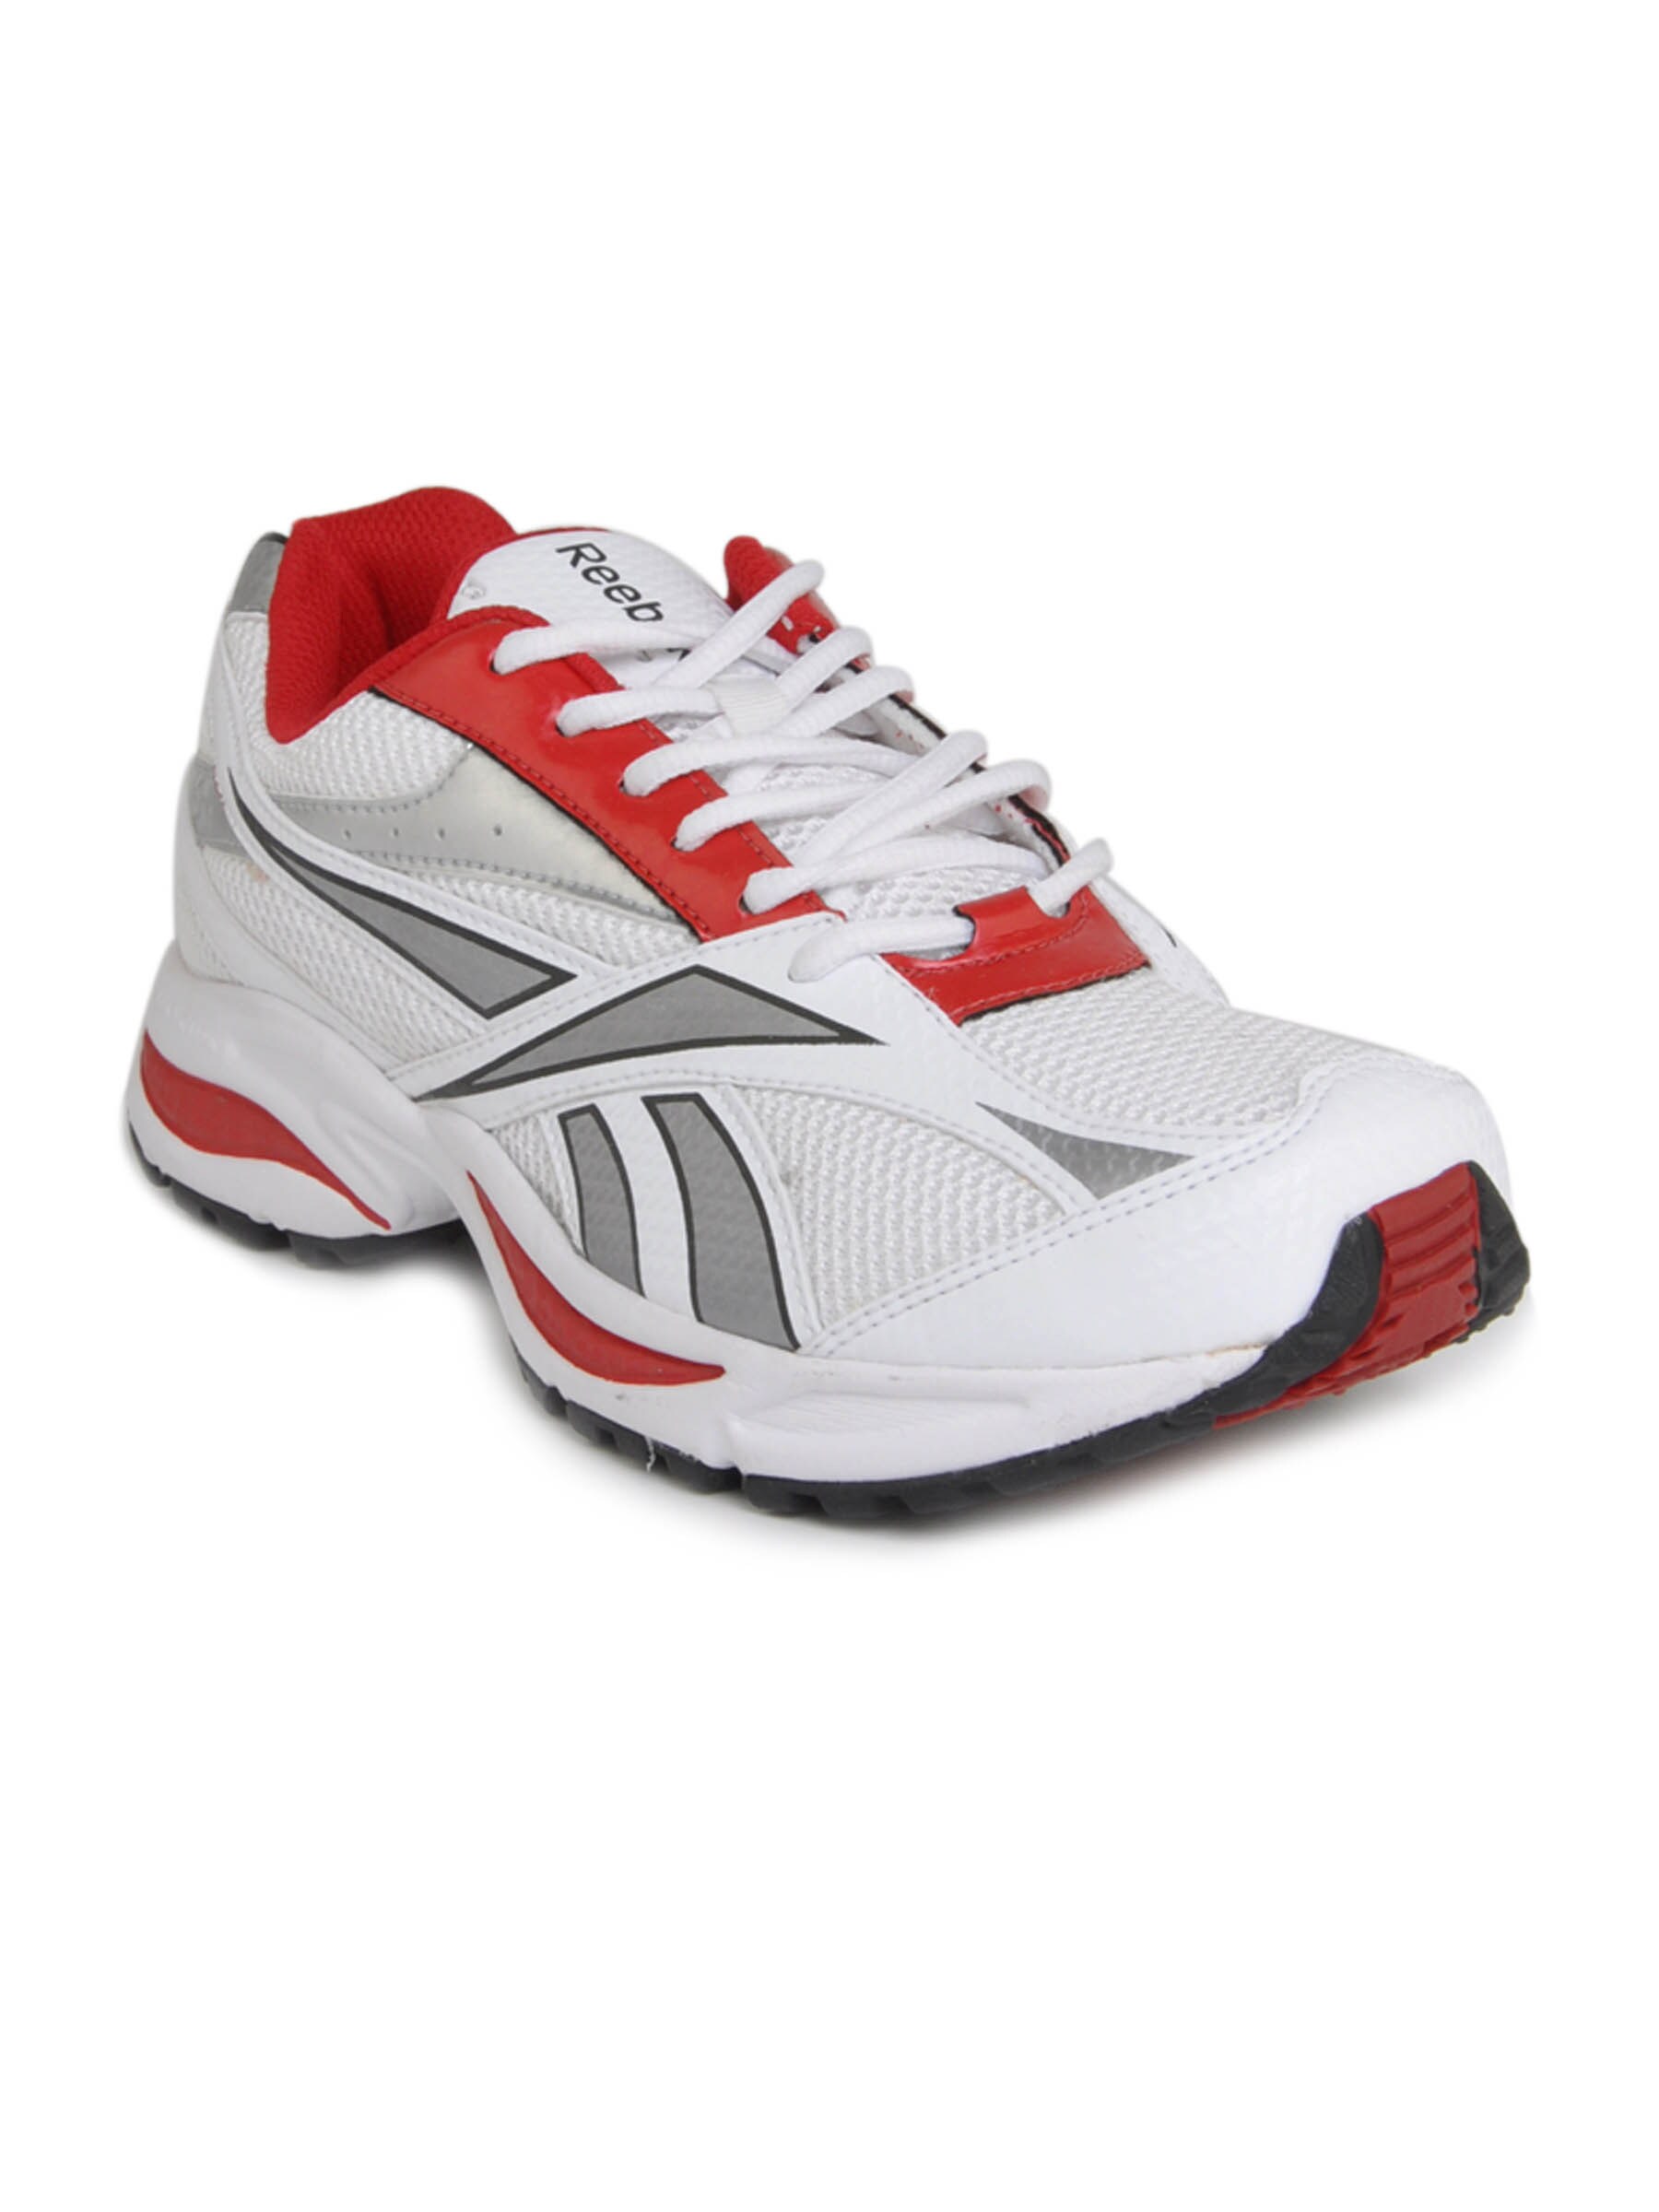 Reebok Men Speed Mode White Sports Shoes